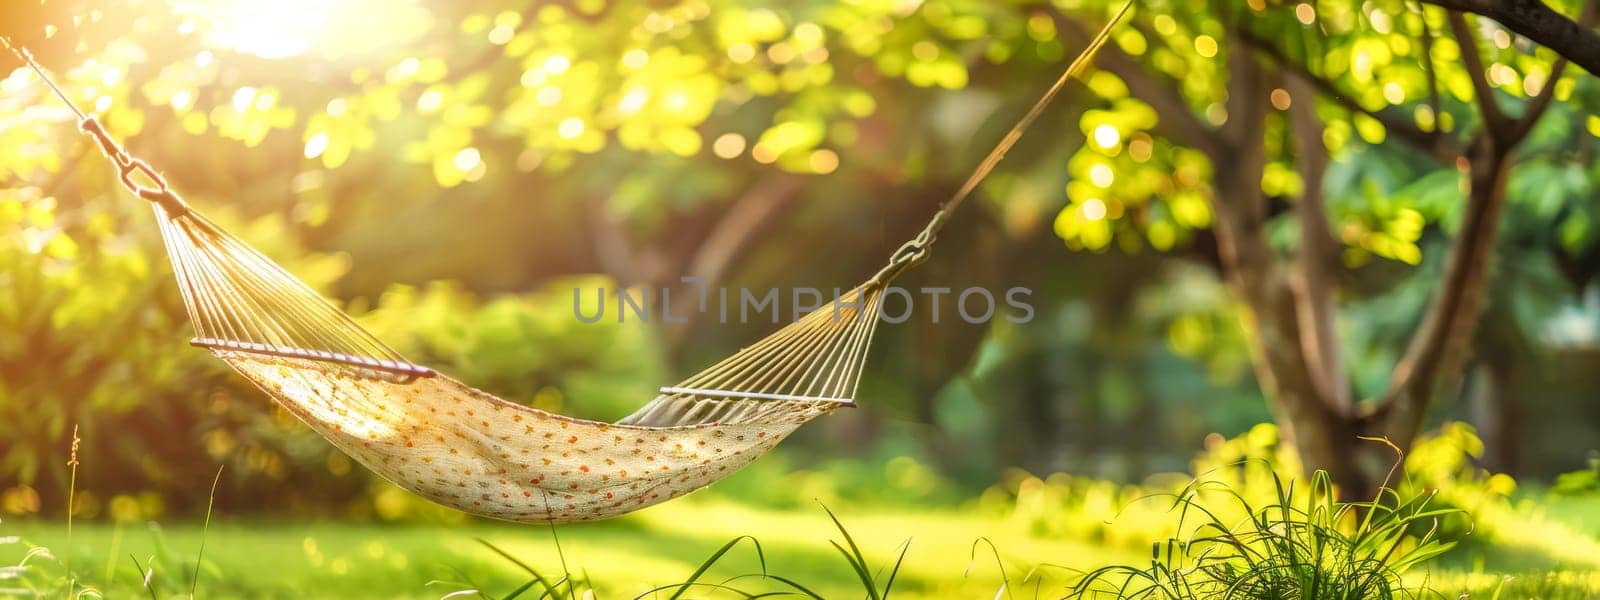 Serene summer hammock in sunlit garden by Edophoto